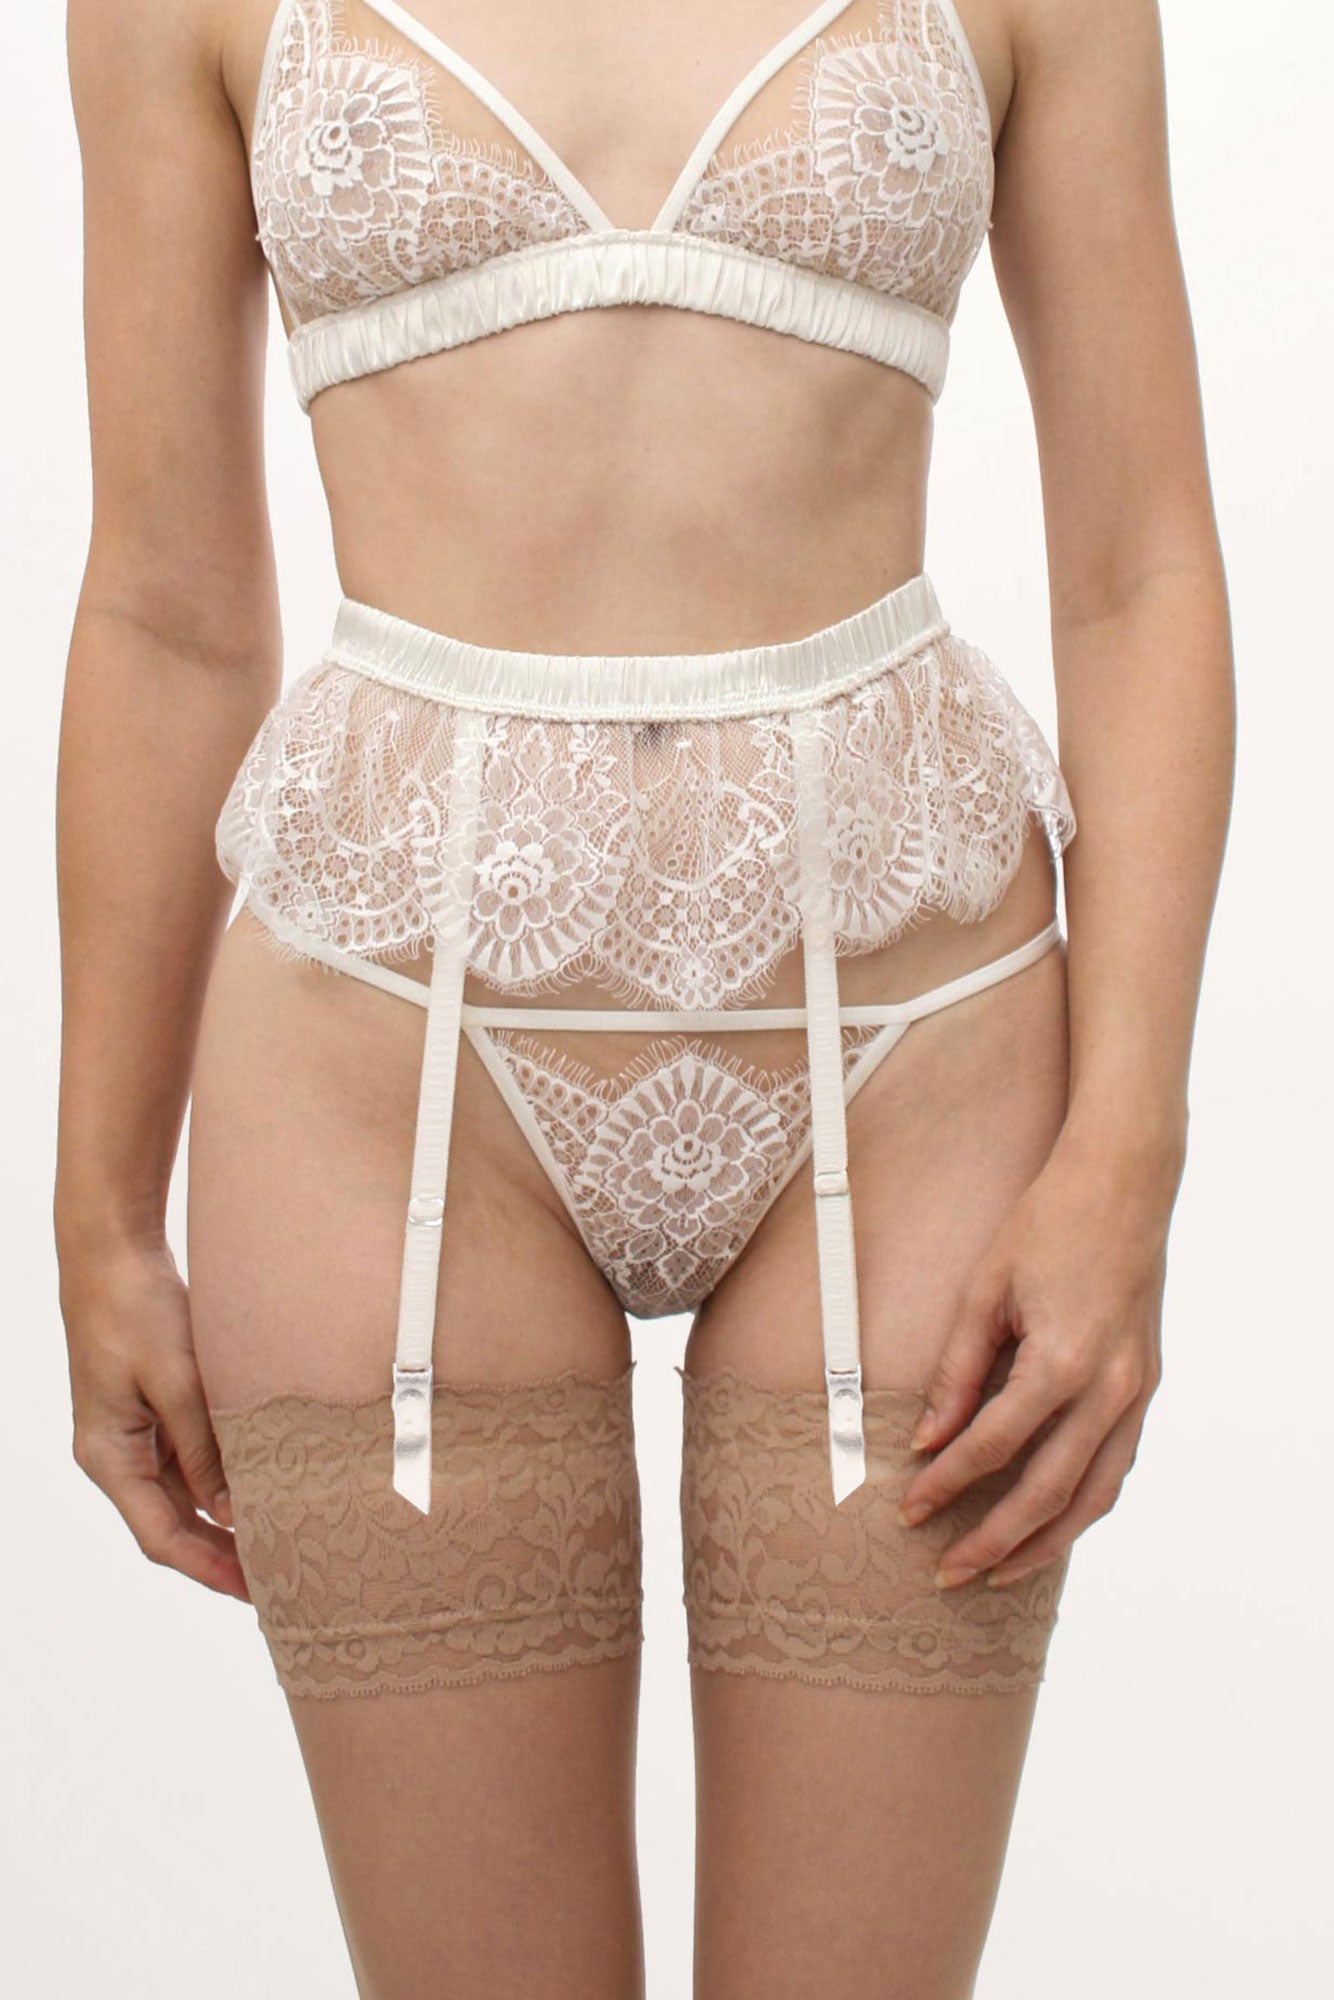 Lace White Lace Lingerie Wedding Set Bra Bralette Panty Panties Thong Basic  Handmade Underwear Stocking Belt -  Canada